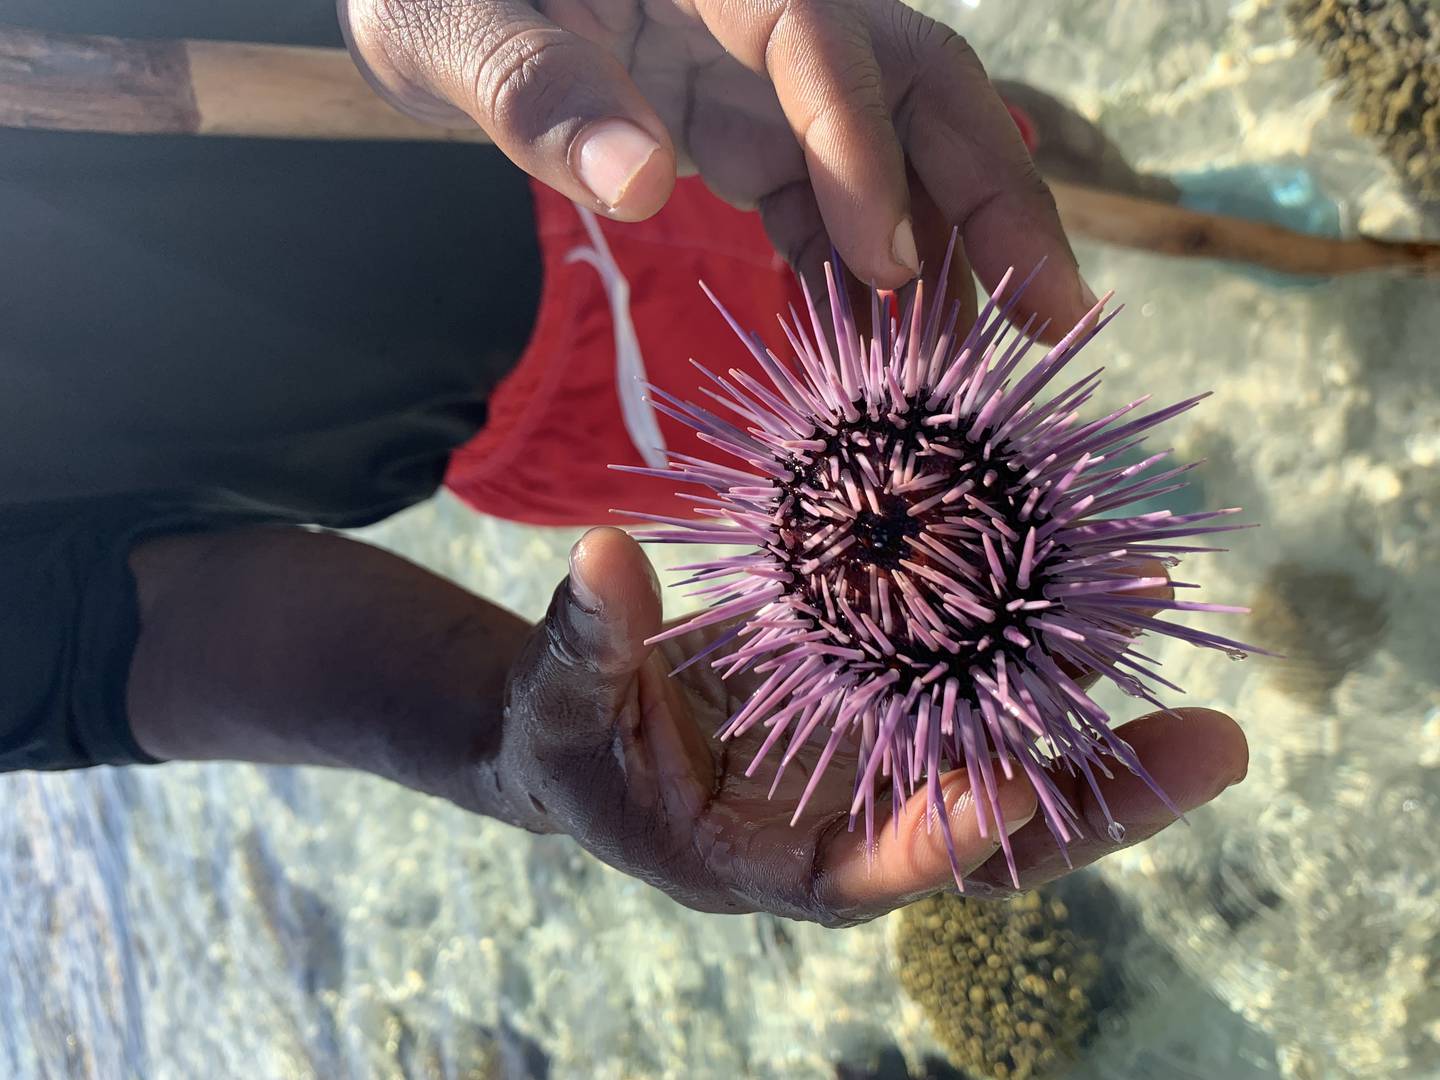 A morning reef walk yields impressive marine life-spotting opportunities. The Zanzibar Collection